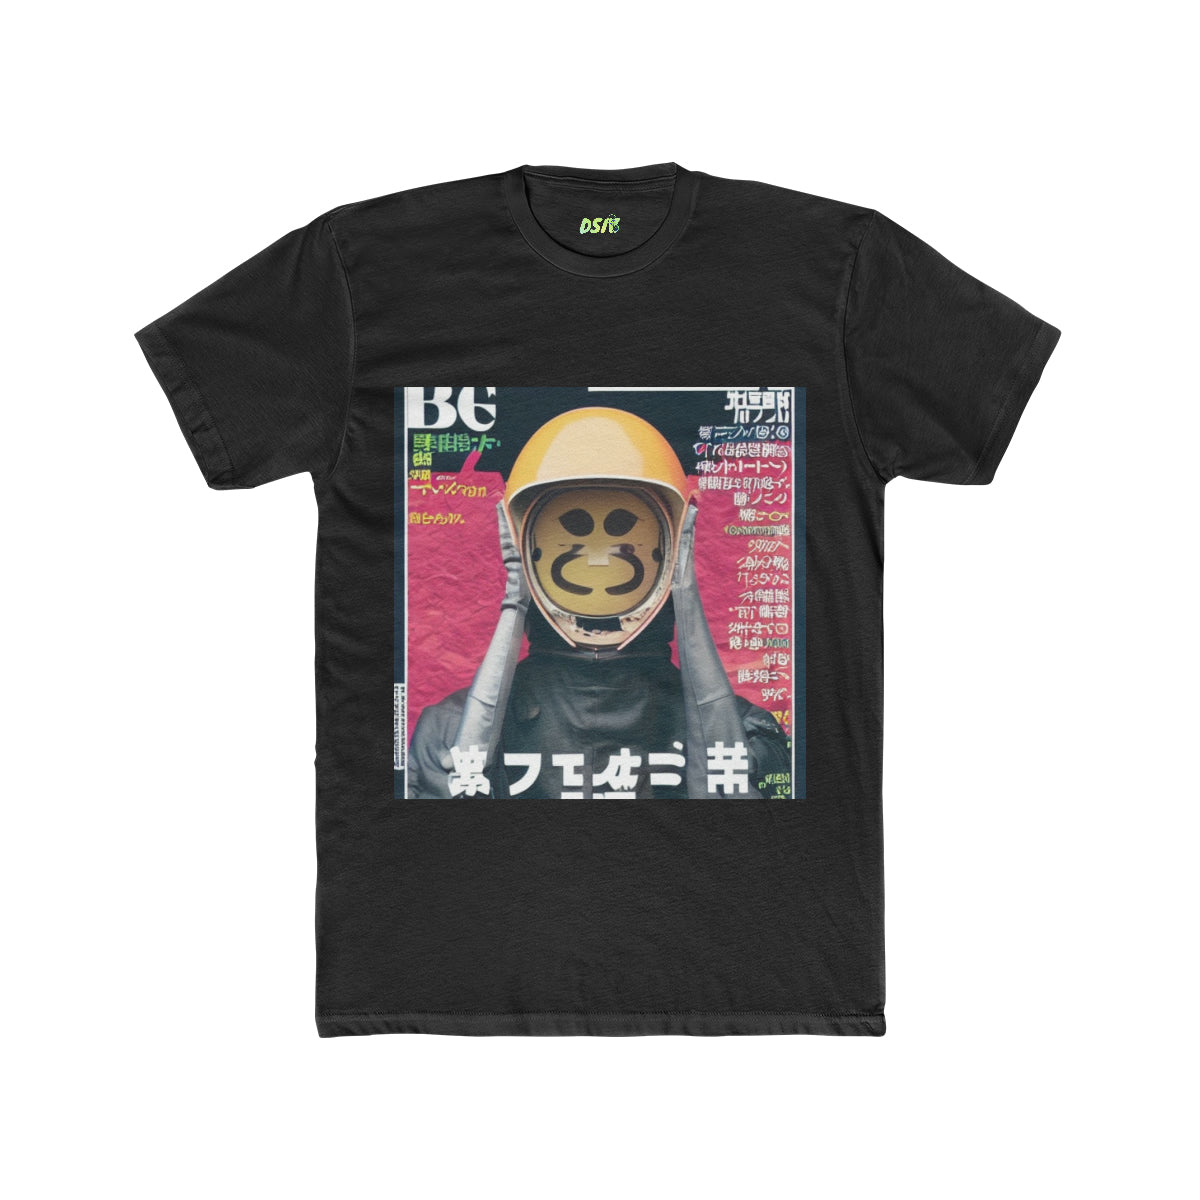 OG BTC Miner - Obey The Code T-Shirt Collection - DSIV